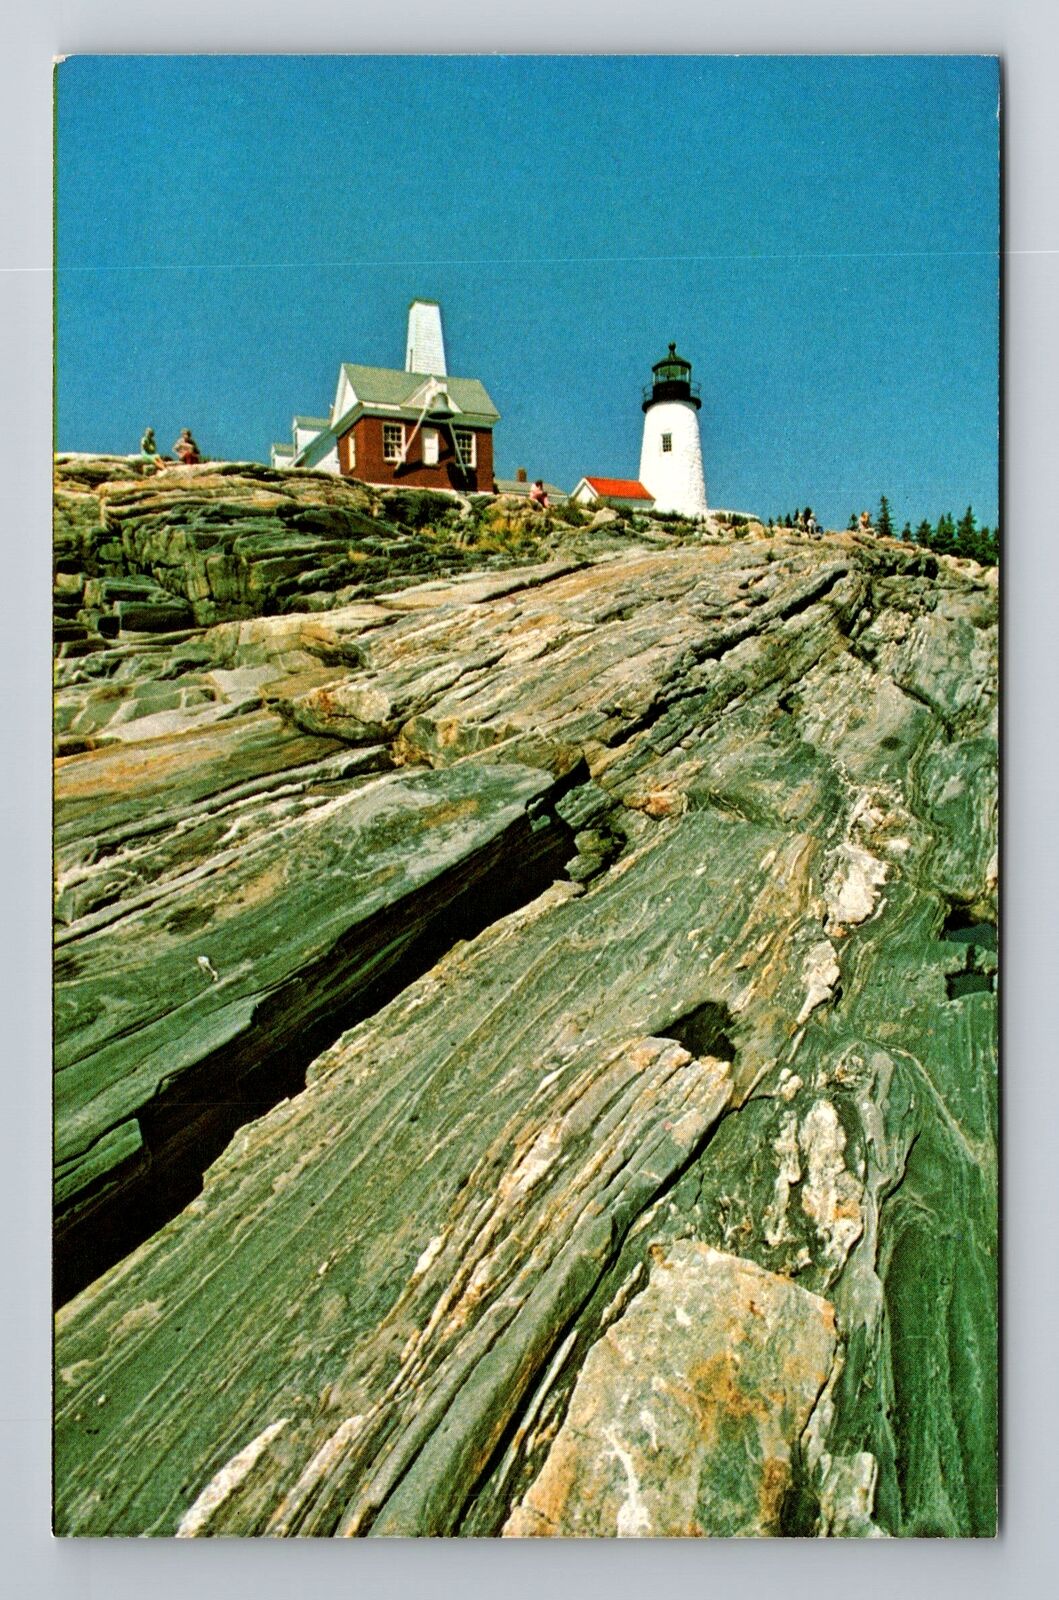 New Harbor, ME-Maine, Pemaquid Point Lighthouse, Antique, Vintage Postcard